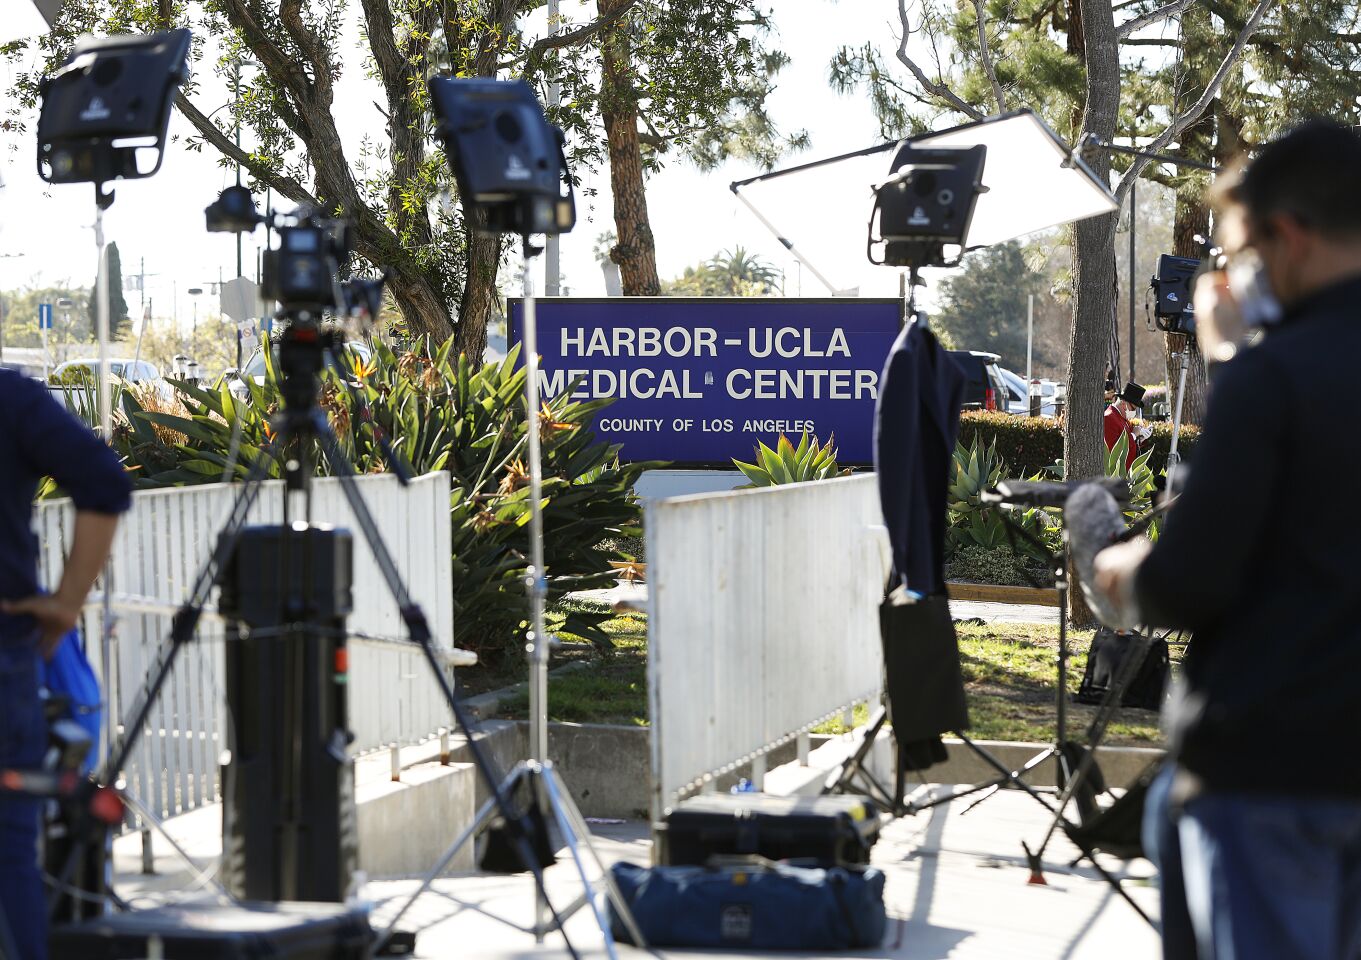 News crews outside Harbor-UCLA Medical Center